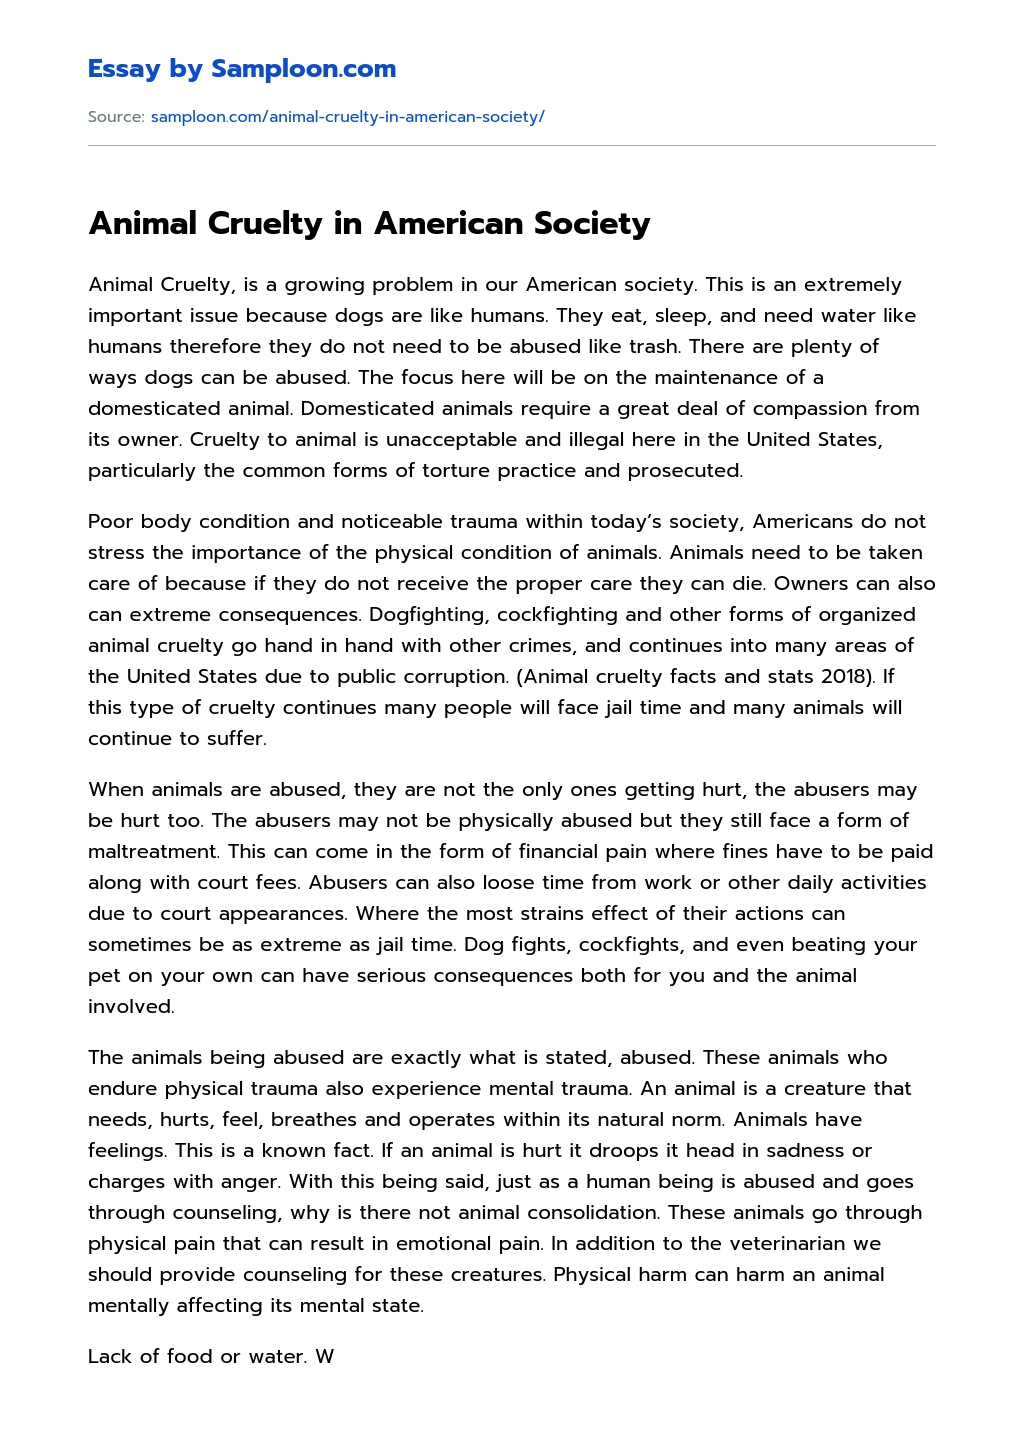 Animal Cruelty in American Society essay